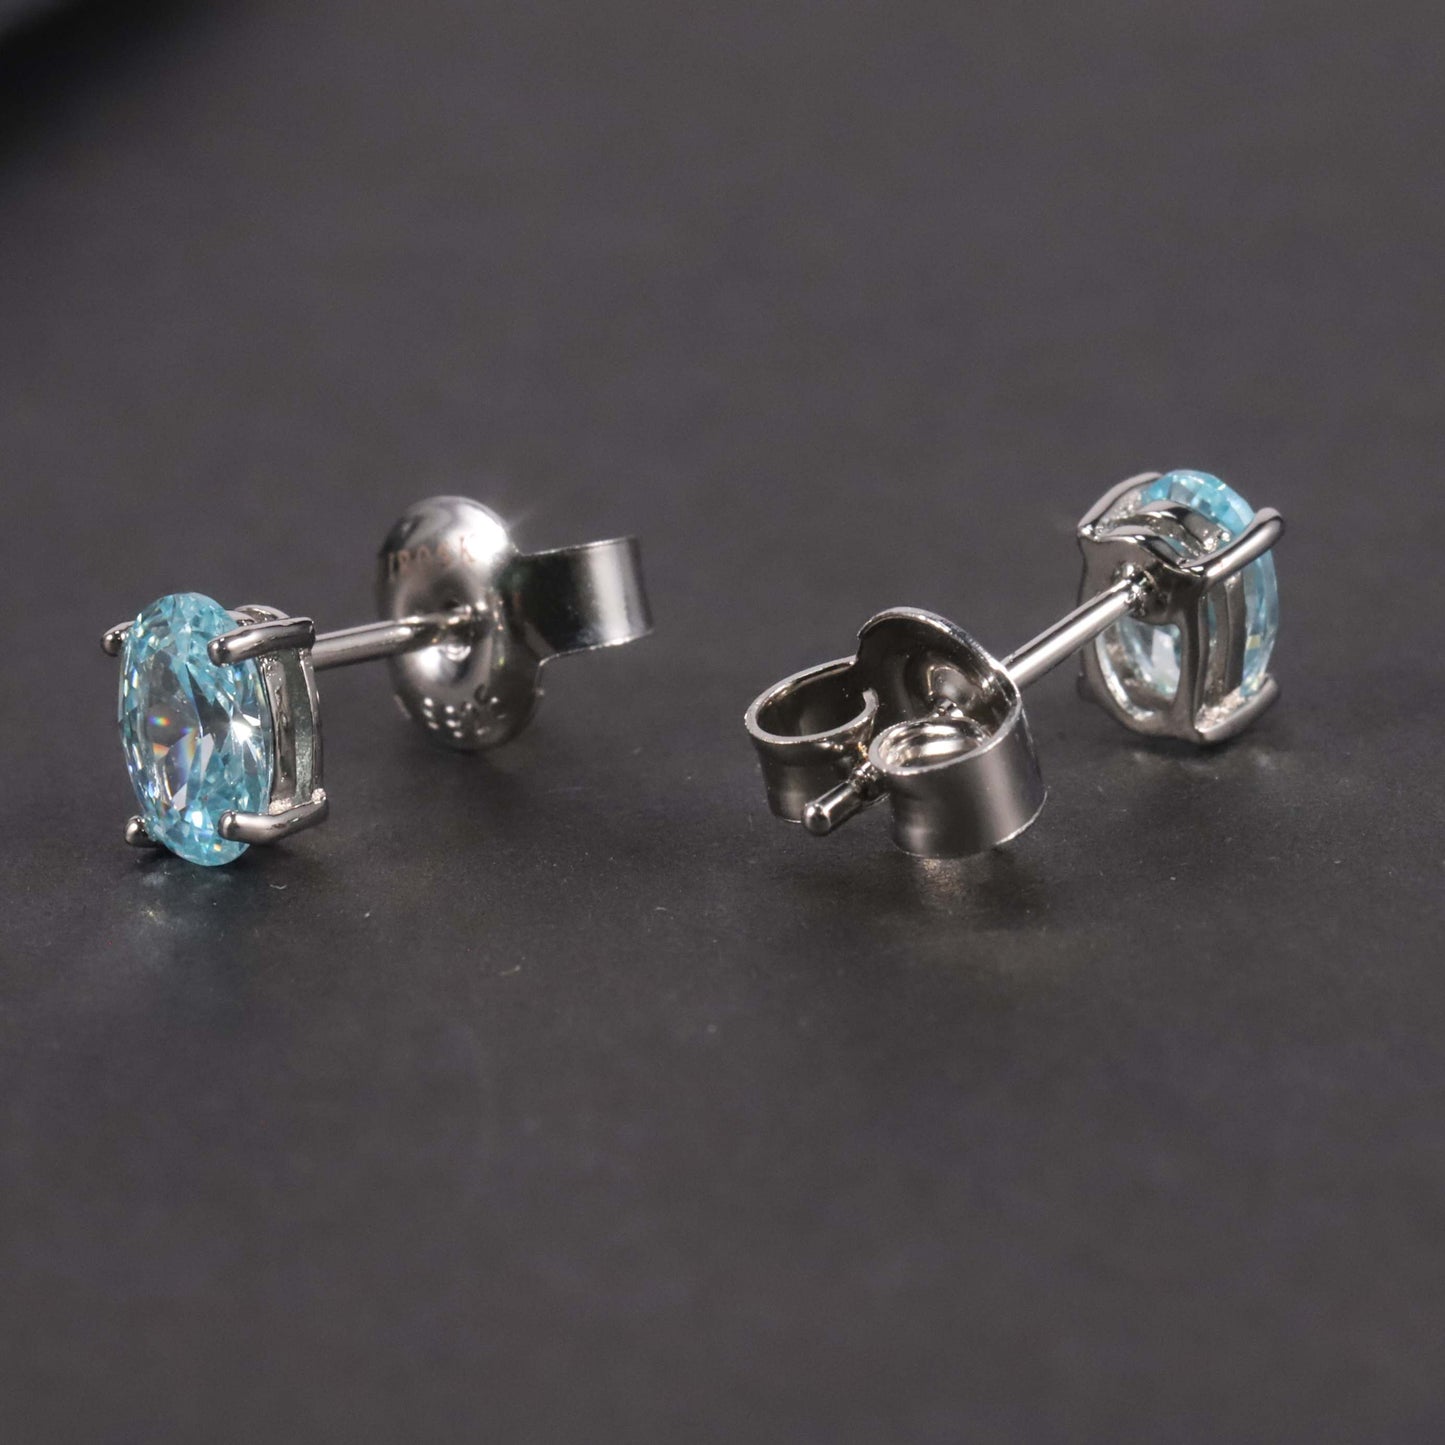 Oval Cut Stud Earrings in Sterling Silver -  Aquamarine